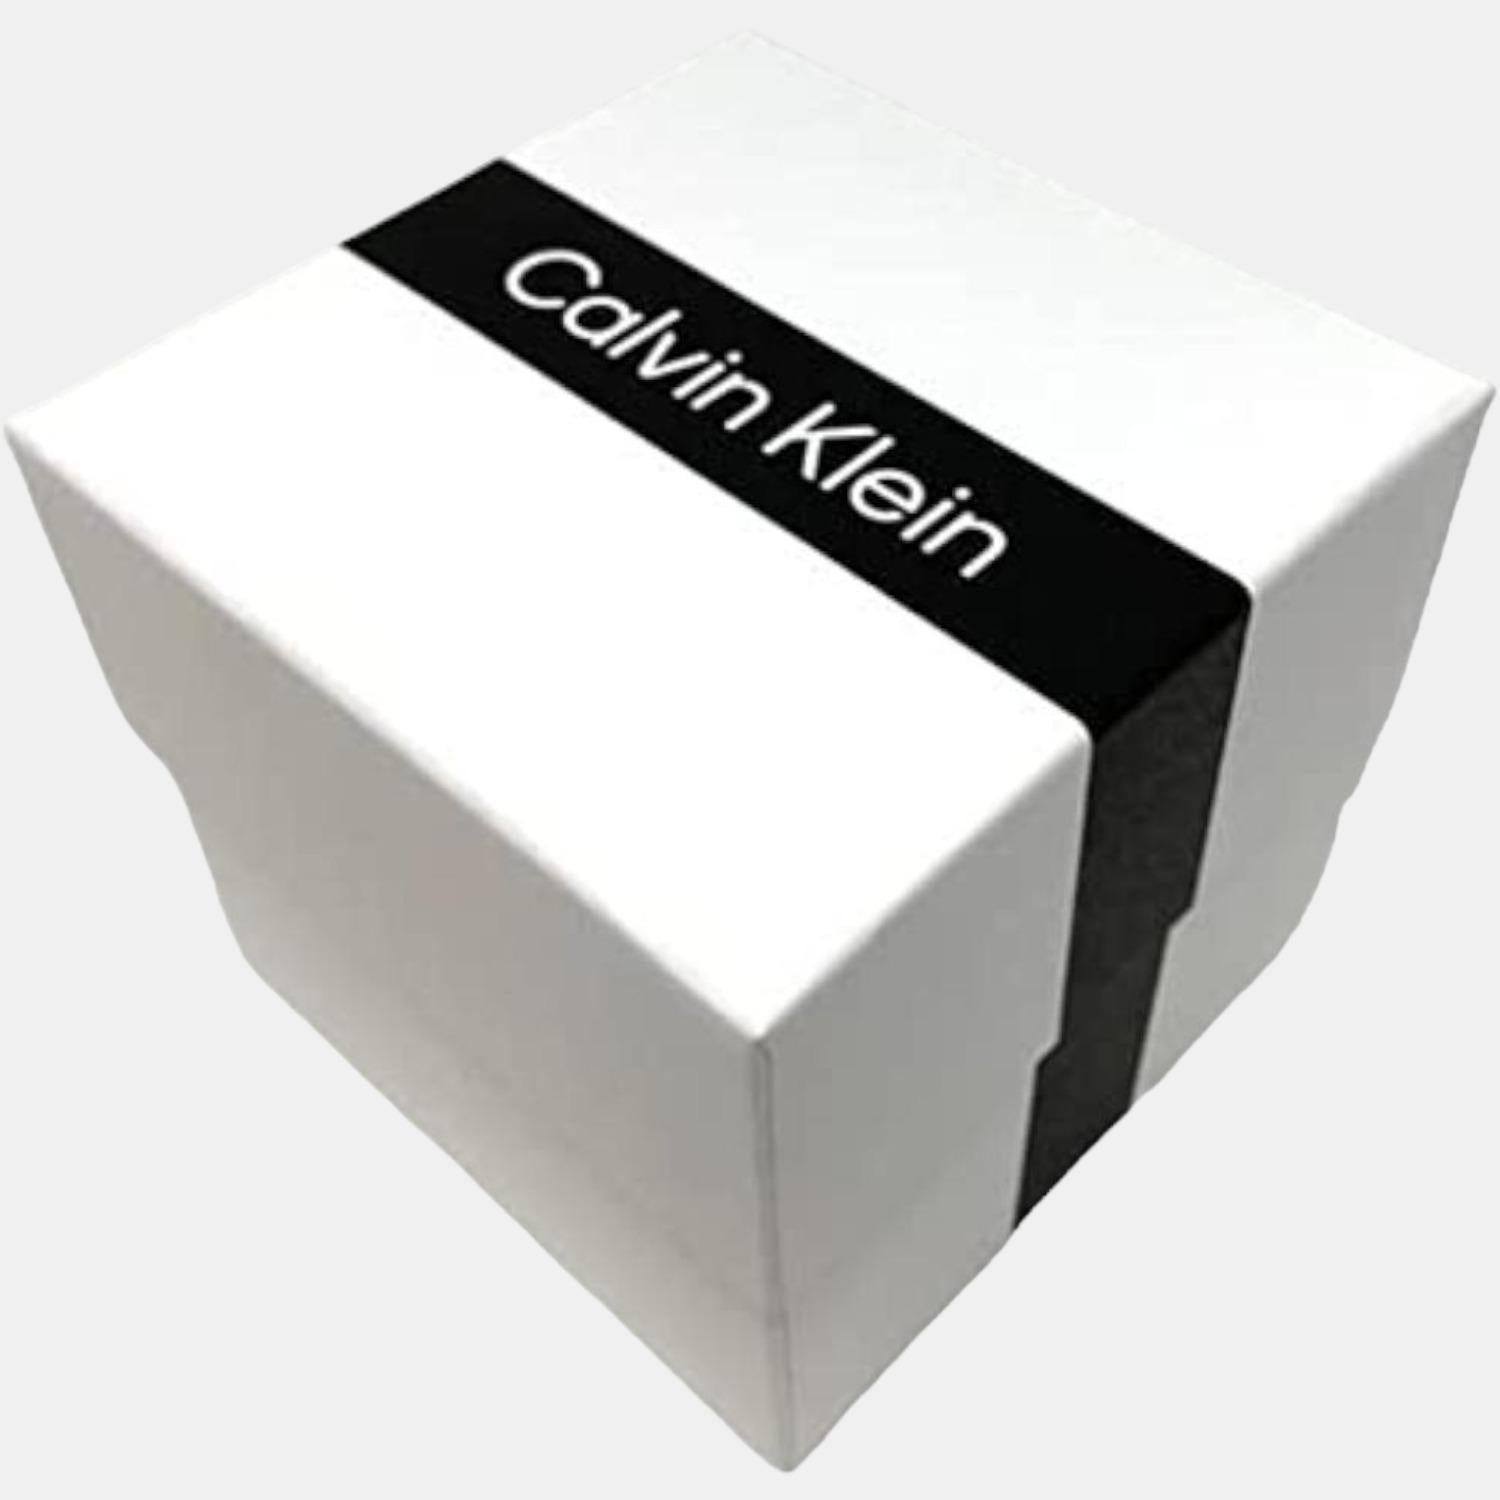 calvin-klein-stainless-steel-multicolour-analog-women-watch-25200007